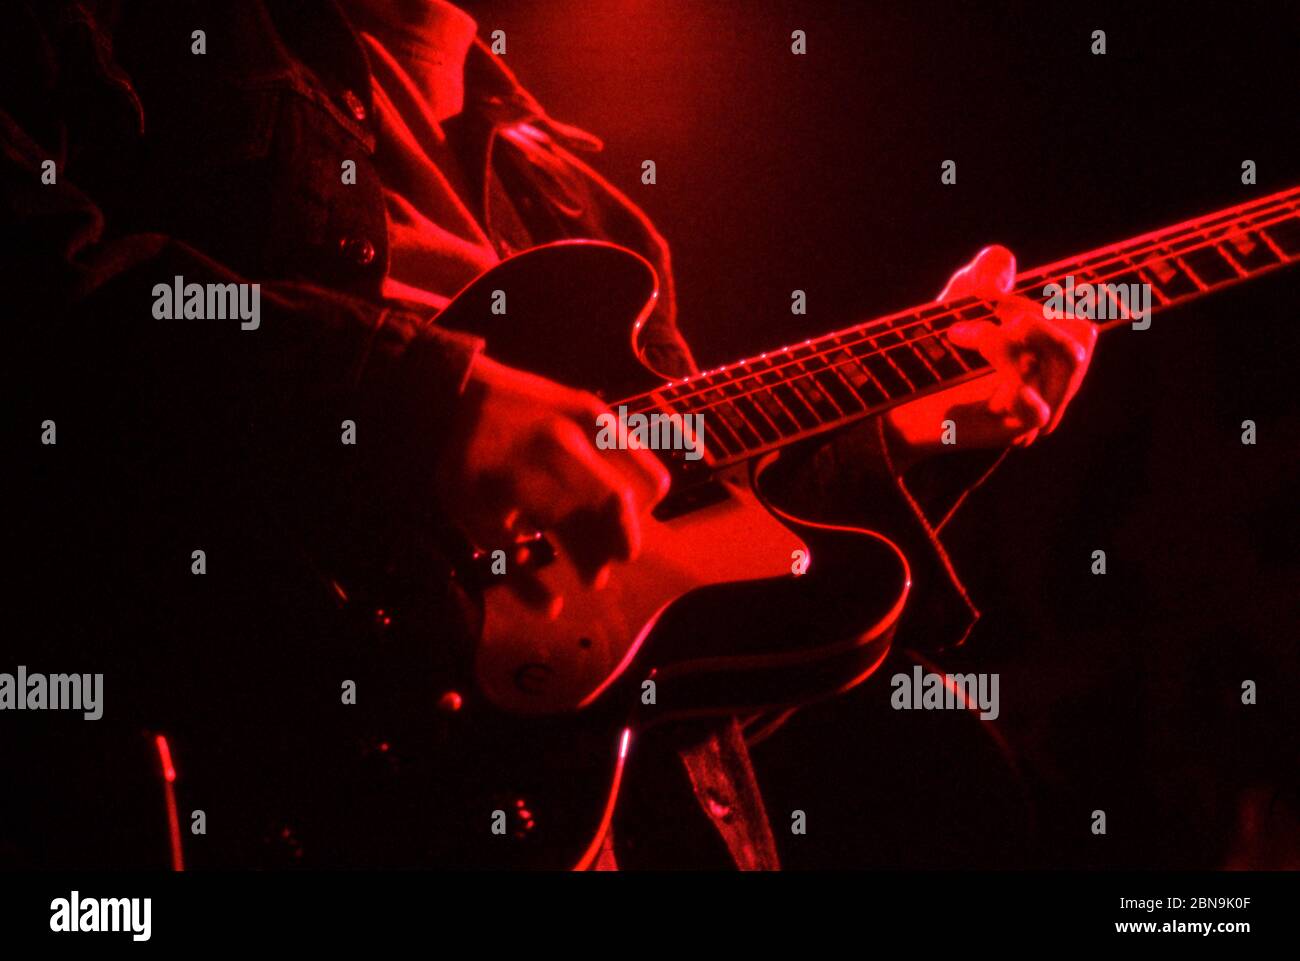 Primer plano de guitarrista tocando guitarra eléctrica en vivo bajo iluminación roja. Londres 1991, banda de rock desconocida. Foto de stock